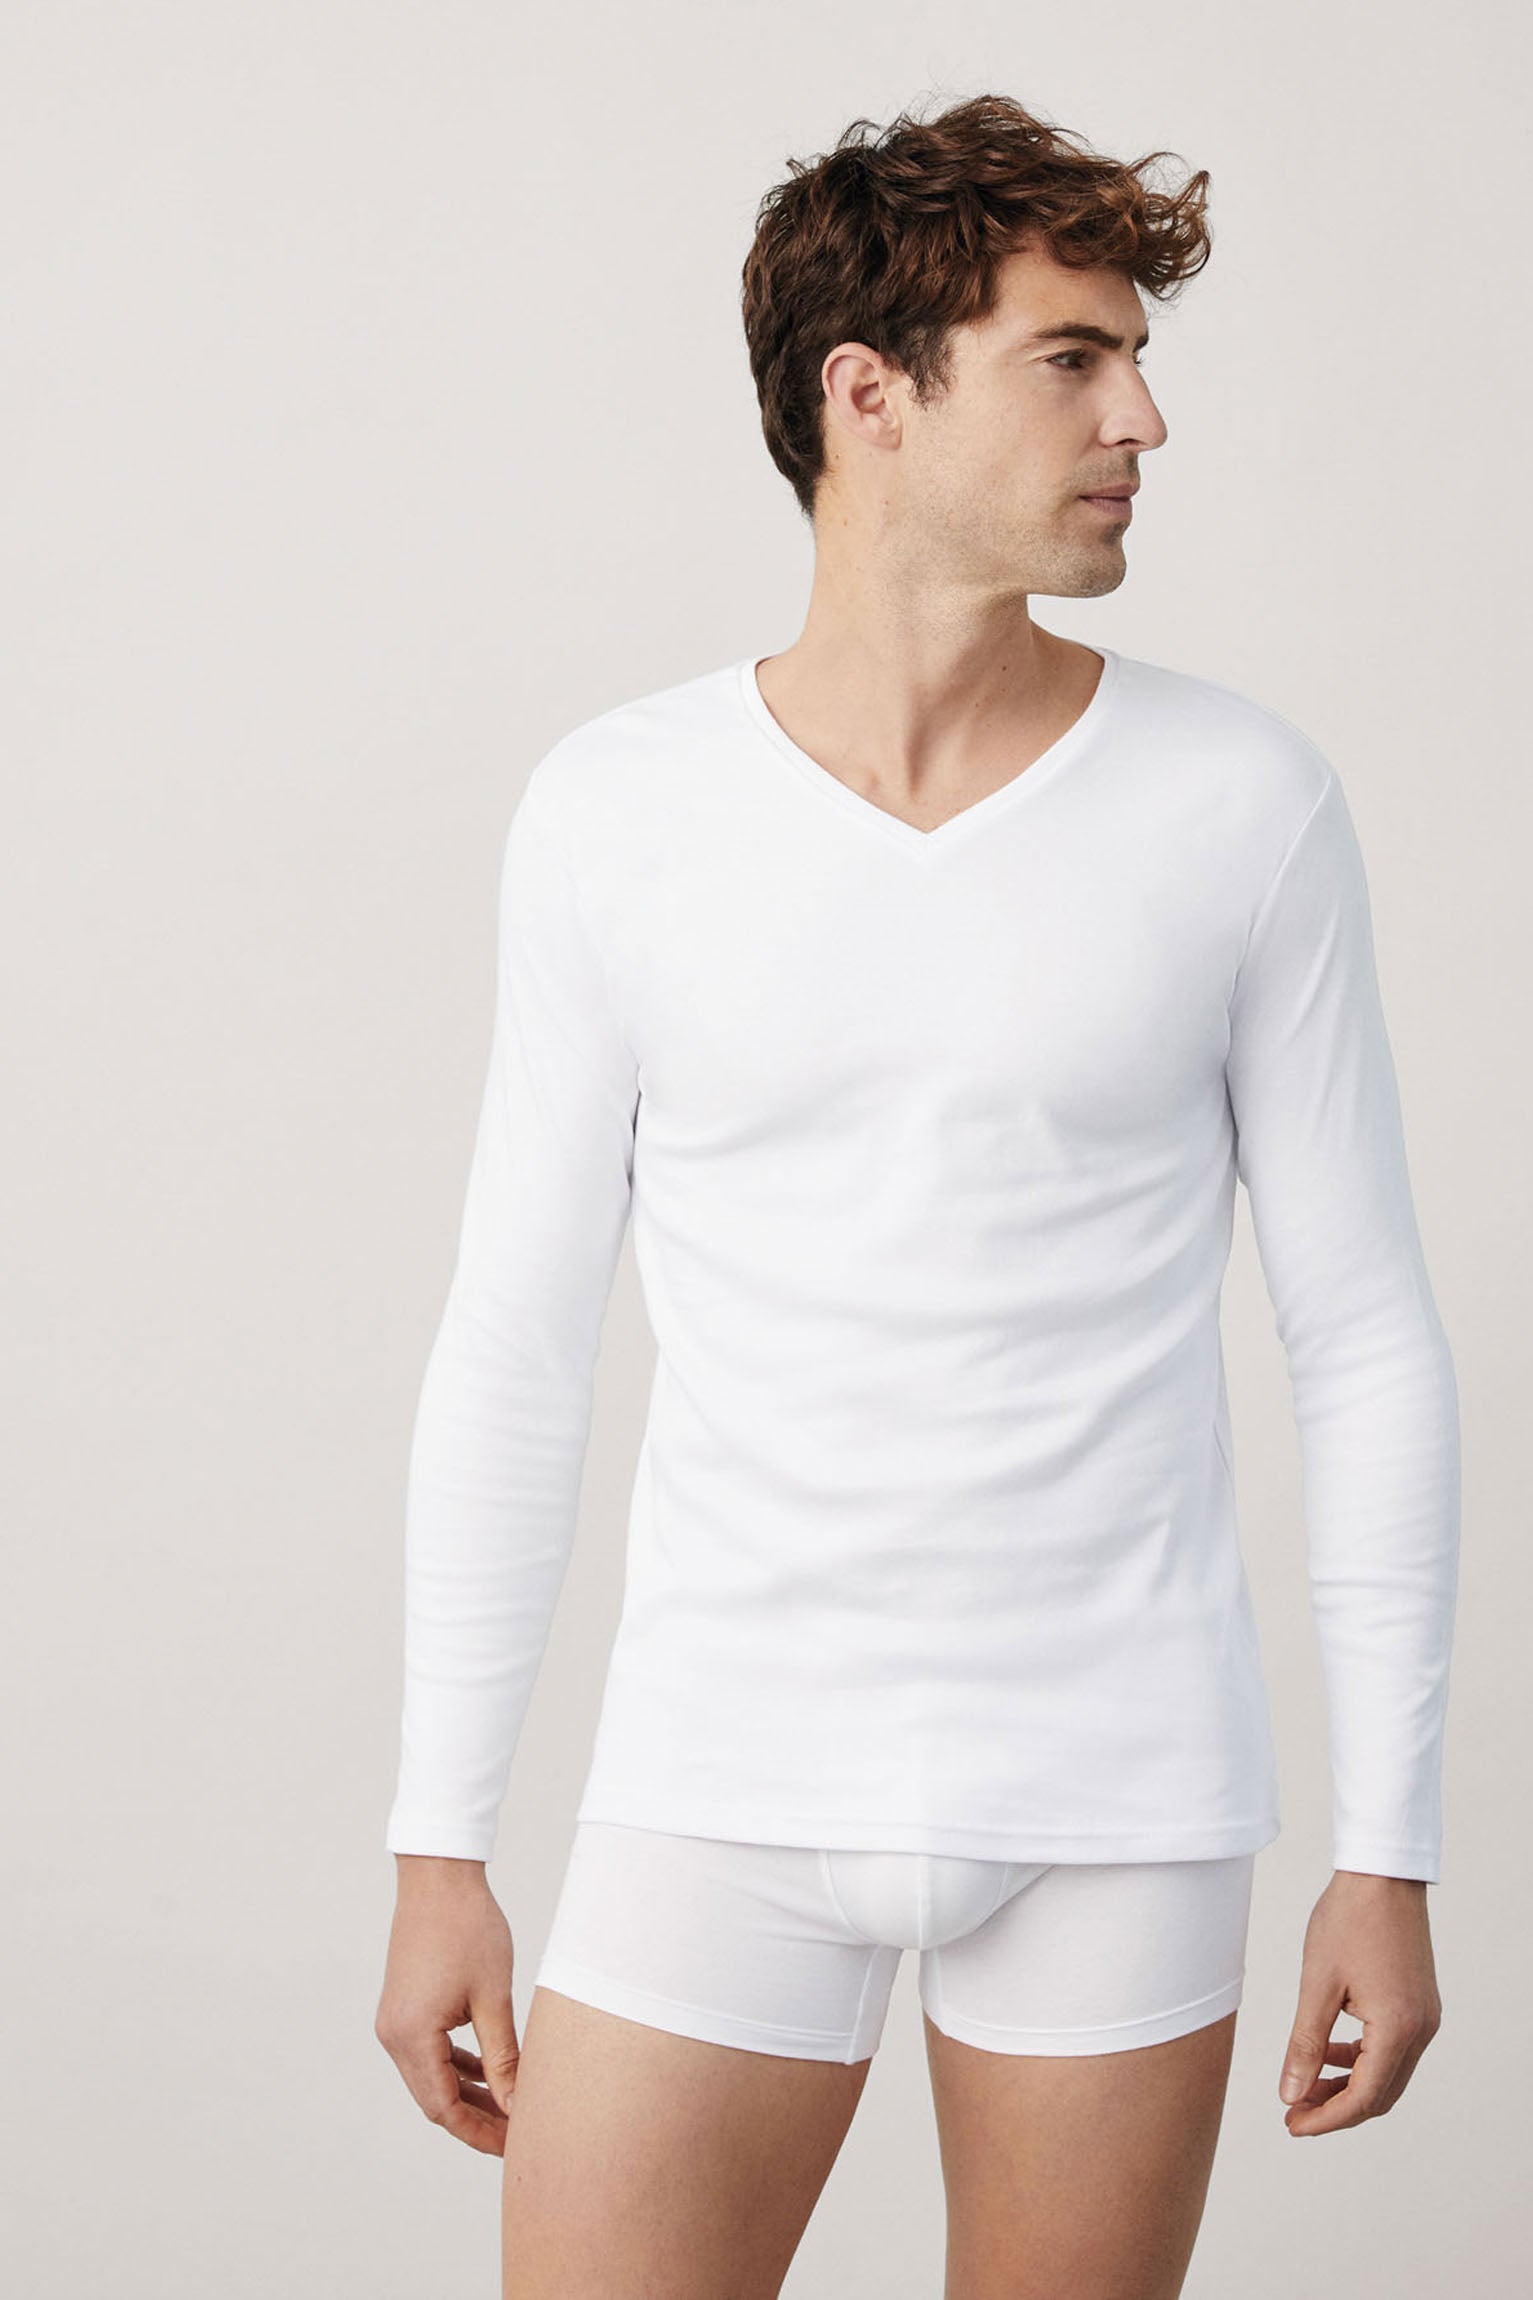 Camiseta Mujer Termal Afelpada Manga Larga 100% Algodon Blanca